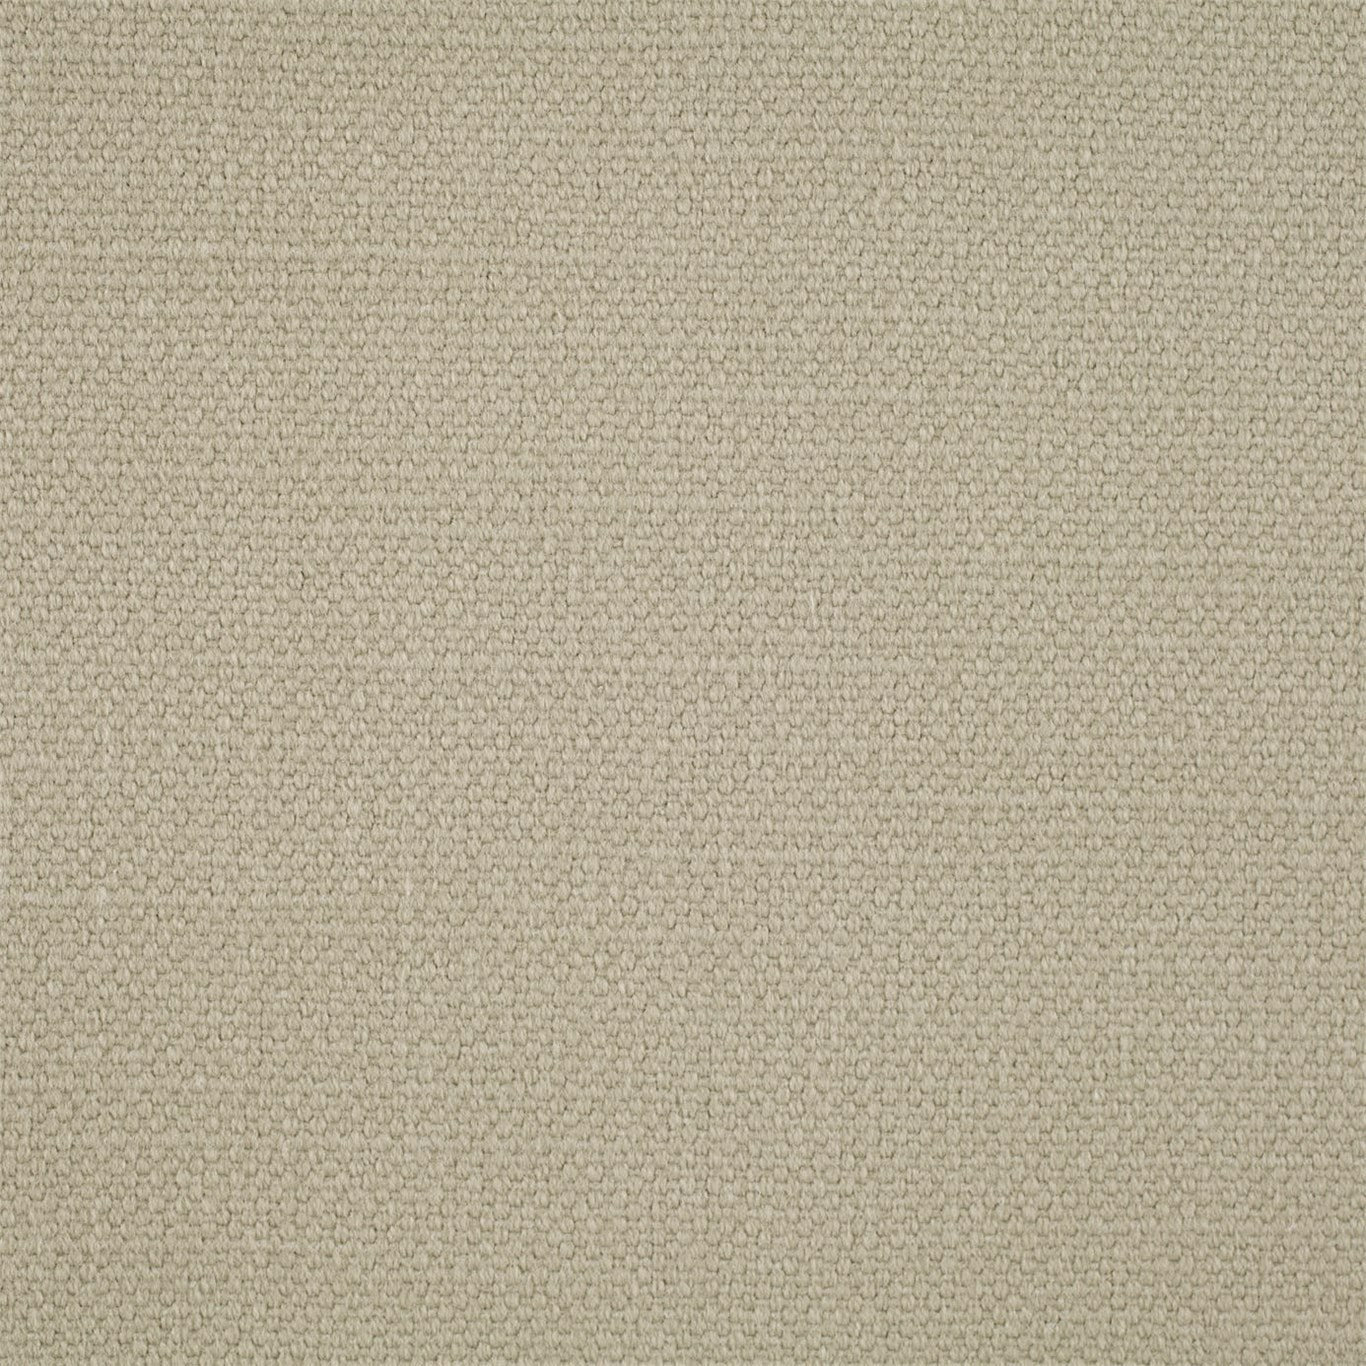 Arley Fabric by Sanderson - DALY245827 - Jade